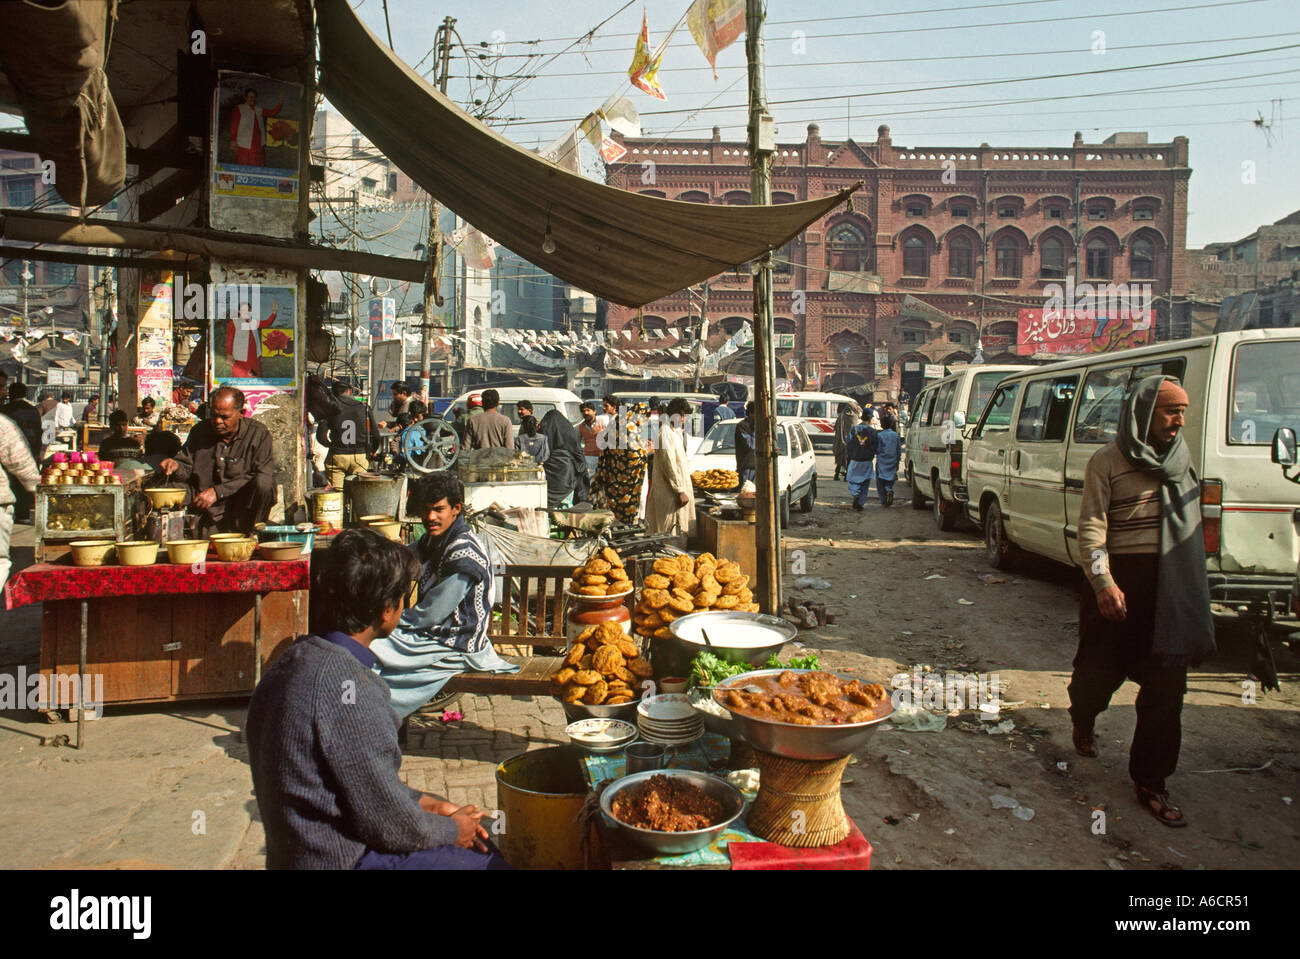 pakistan-punjab-lahore-old-city-crowded-bazaar-scene-A6CR51.jpg